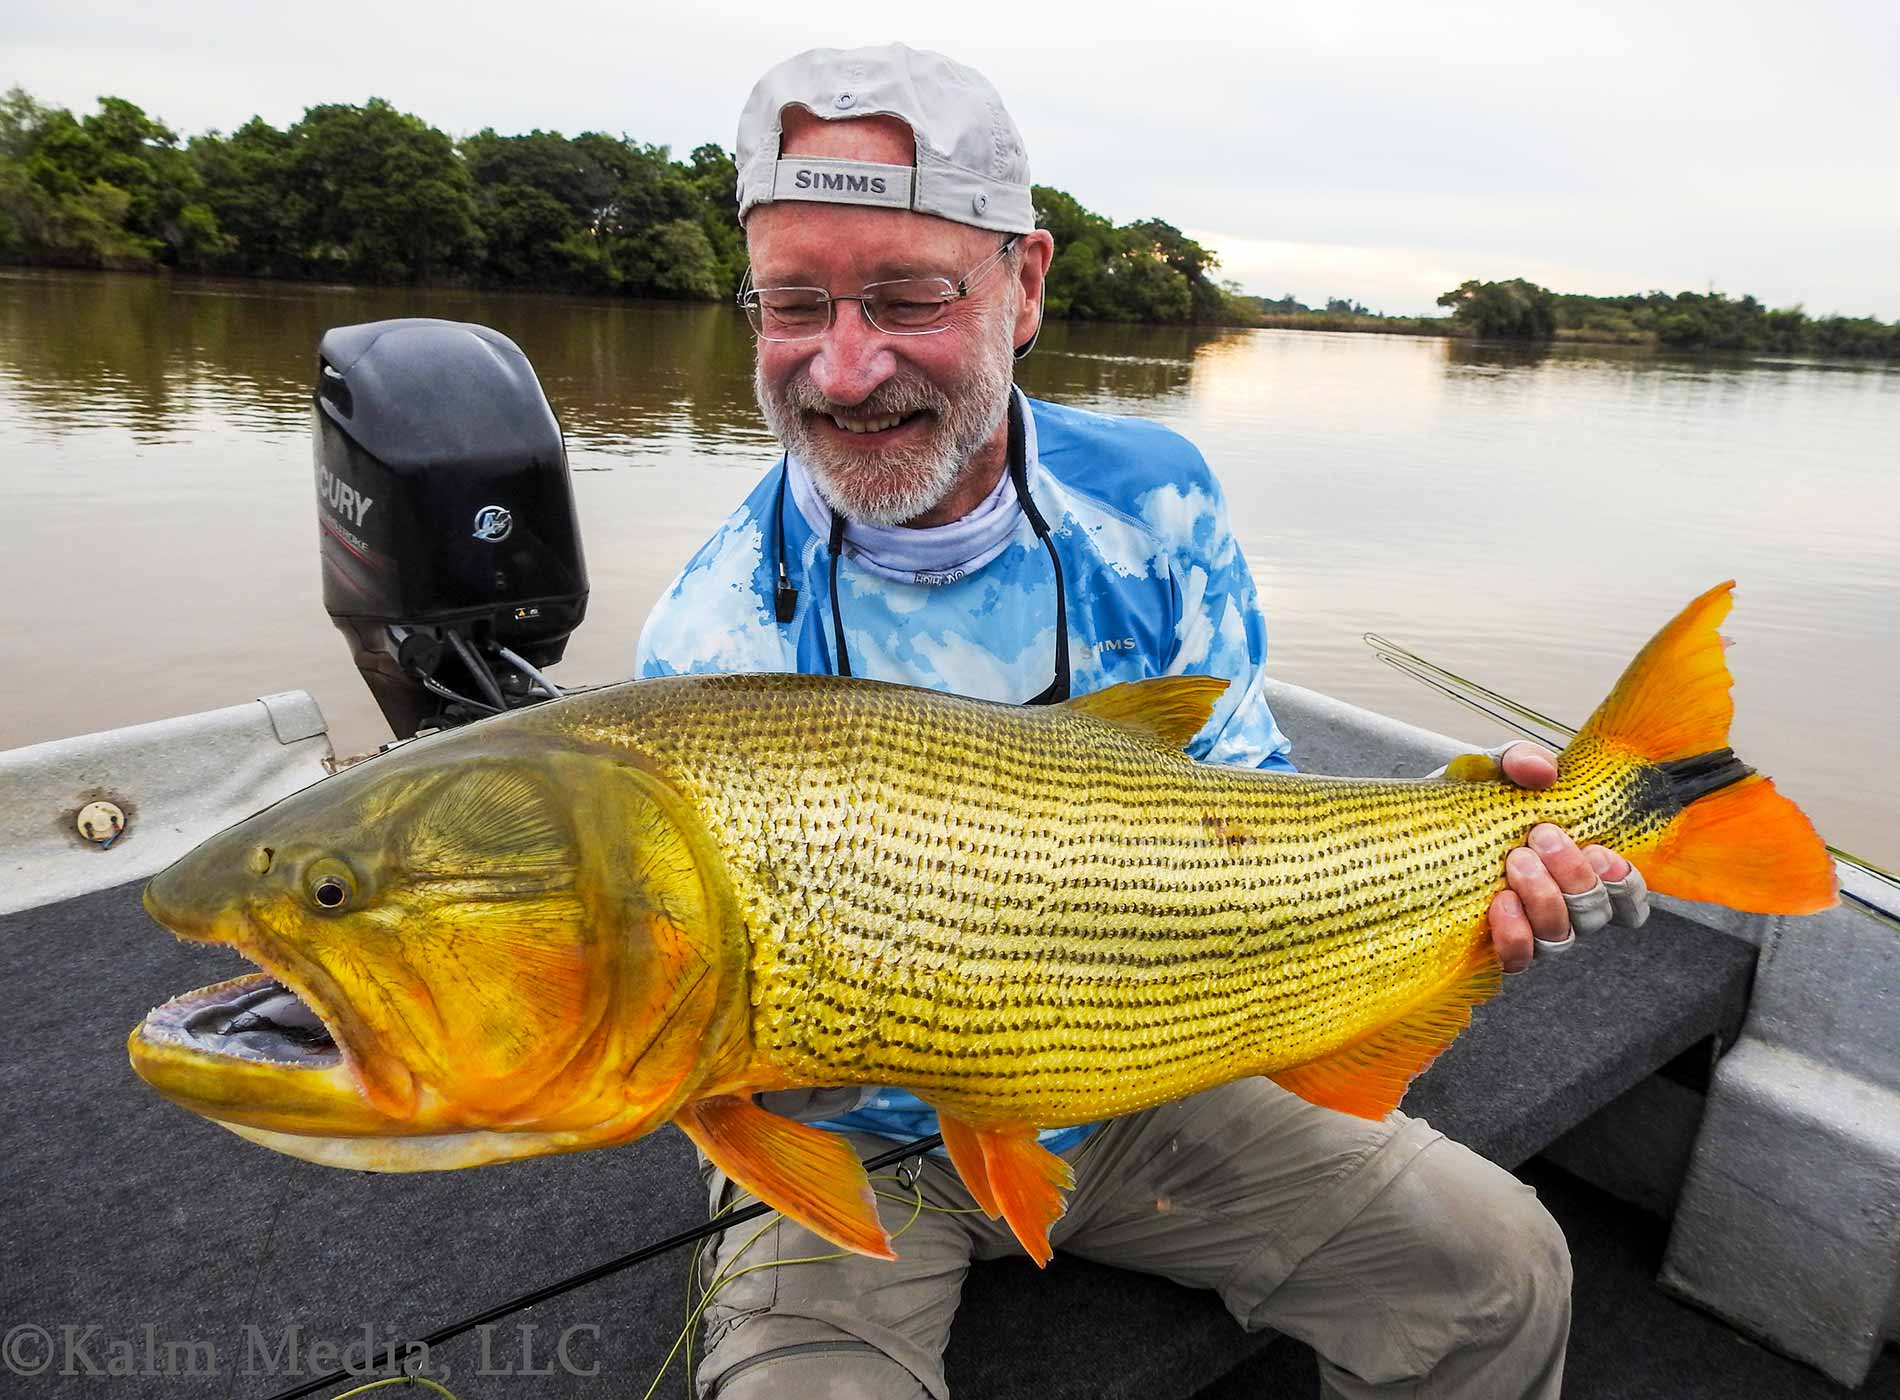 Bill Kalm catches the big fish